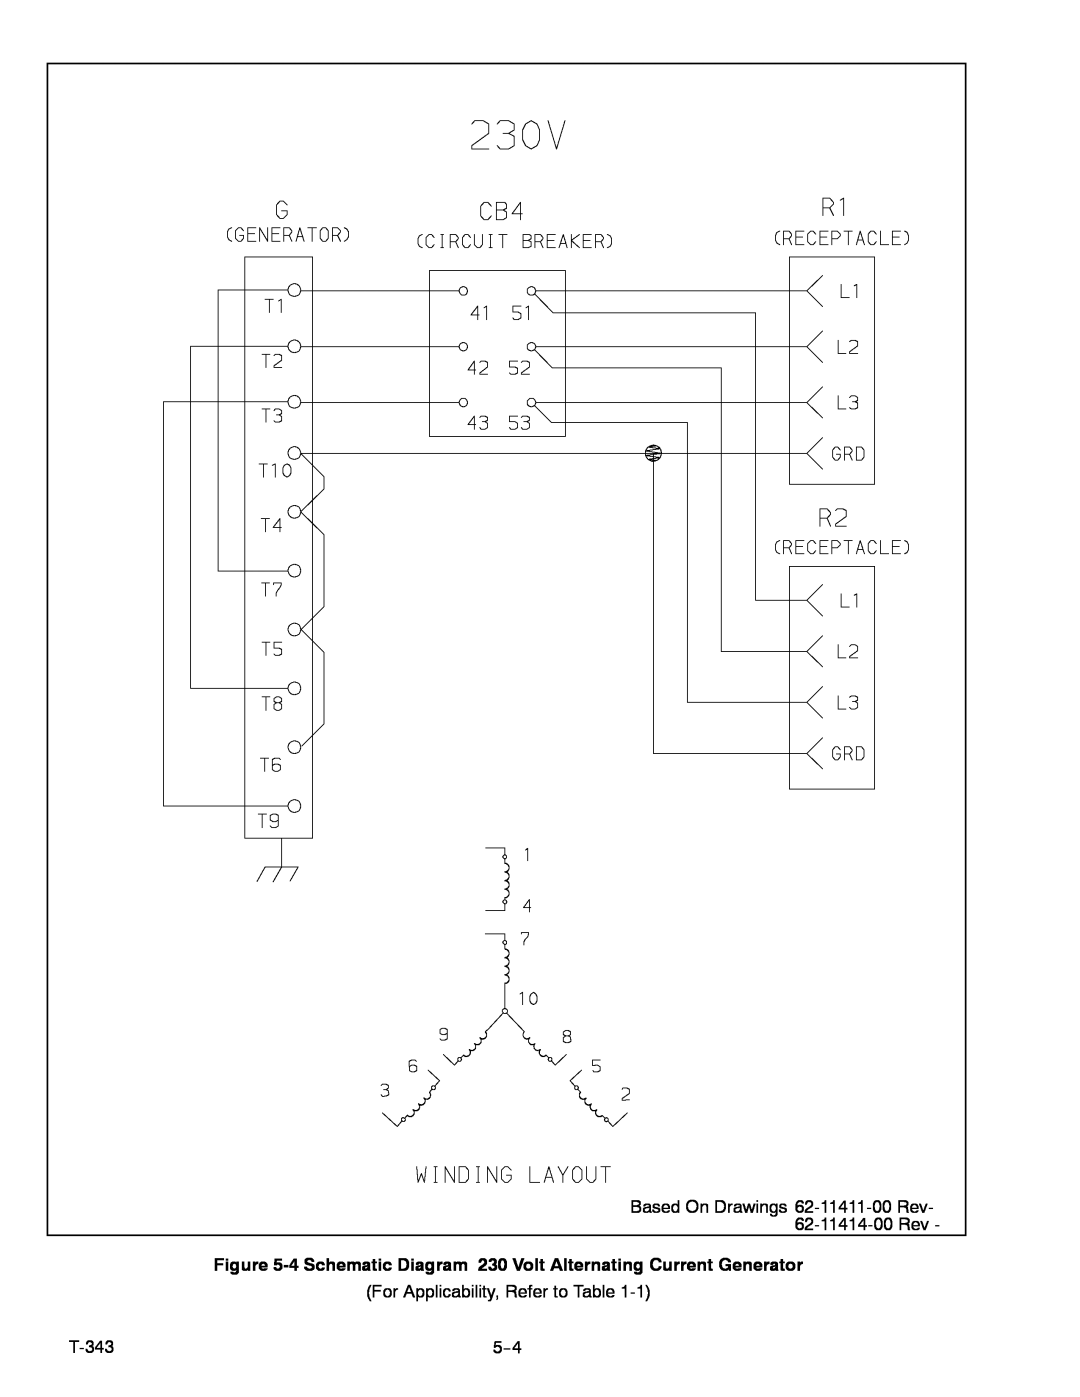 Carrier 69UG15 4 Schematic Diagram 230 Volt Alternating Current Generator, Based On Drawings 62-11411-00 Rev, T-343, 5--4 